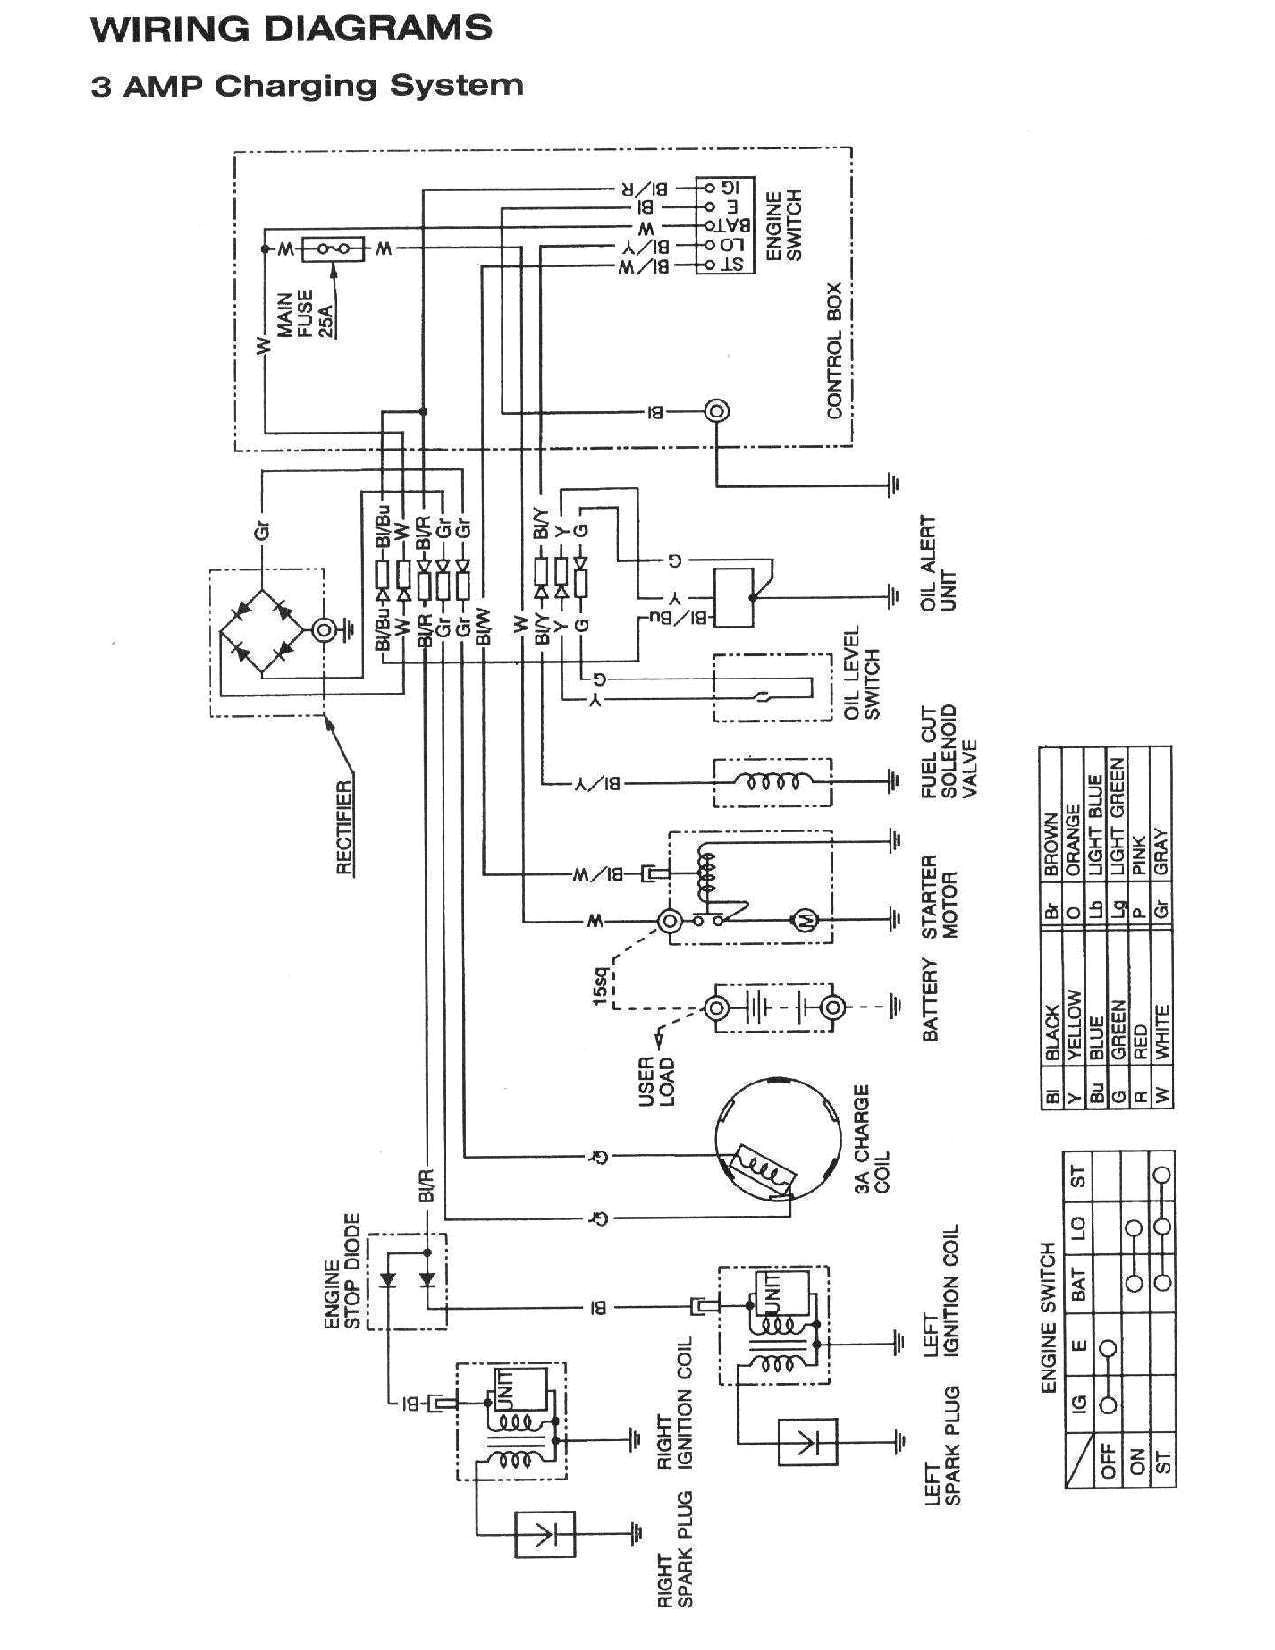 briggs vanguard specs wiring diagram database toshiba wiring diagram